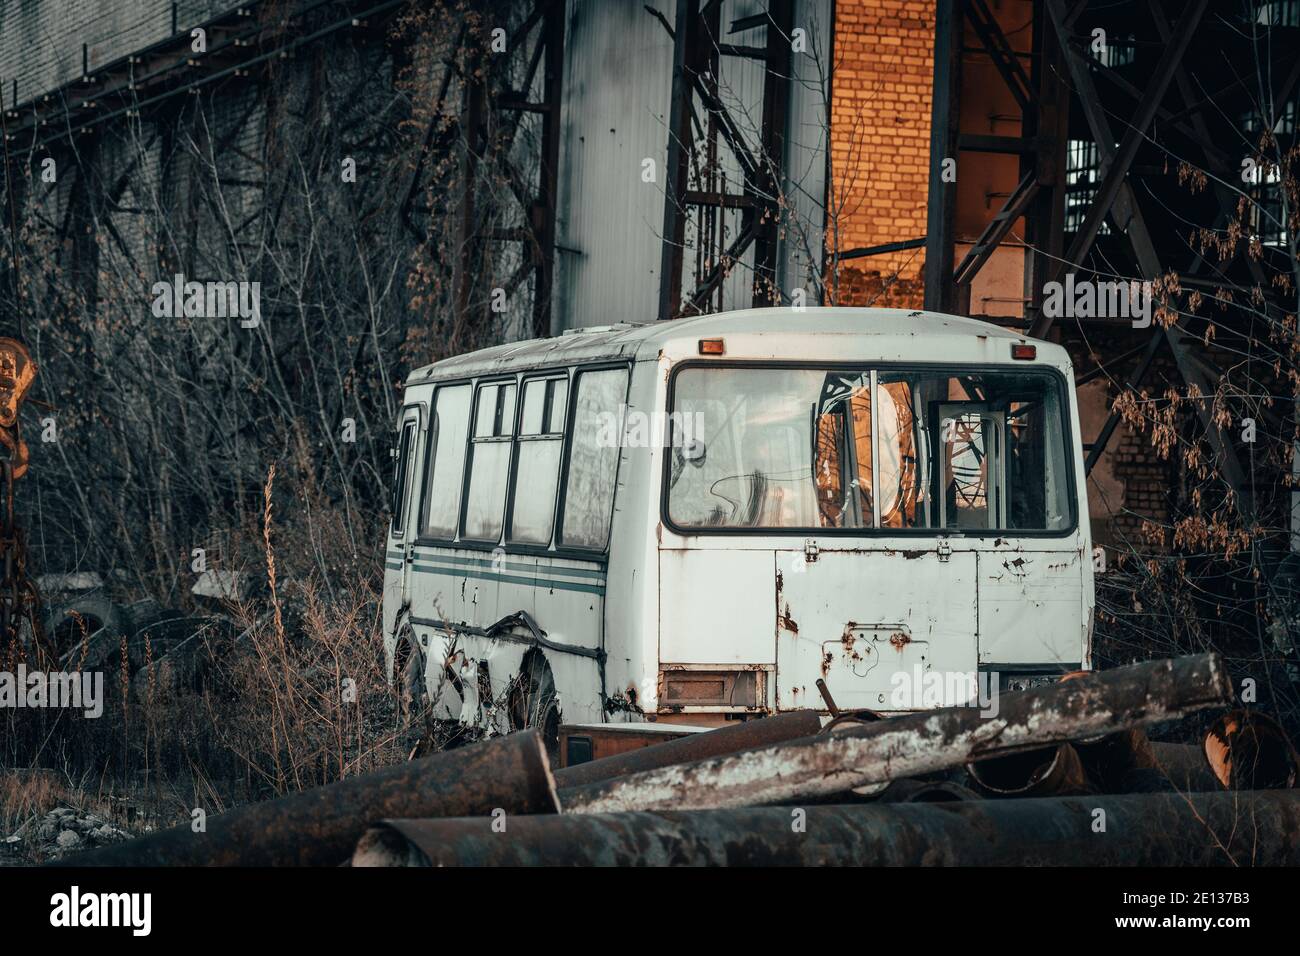 Old rusty broken abandoned bus in dark industrial post apocalyptic landscape. Stock Photo